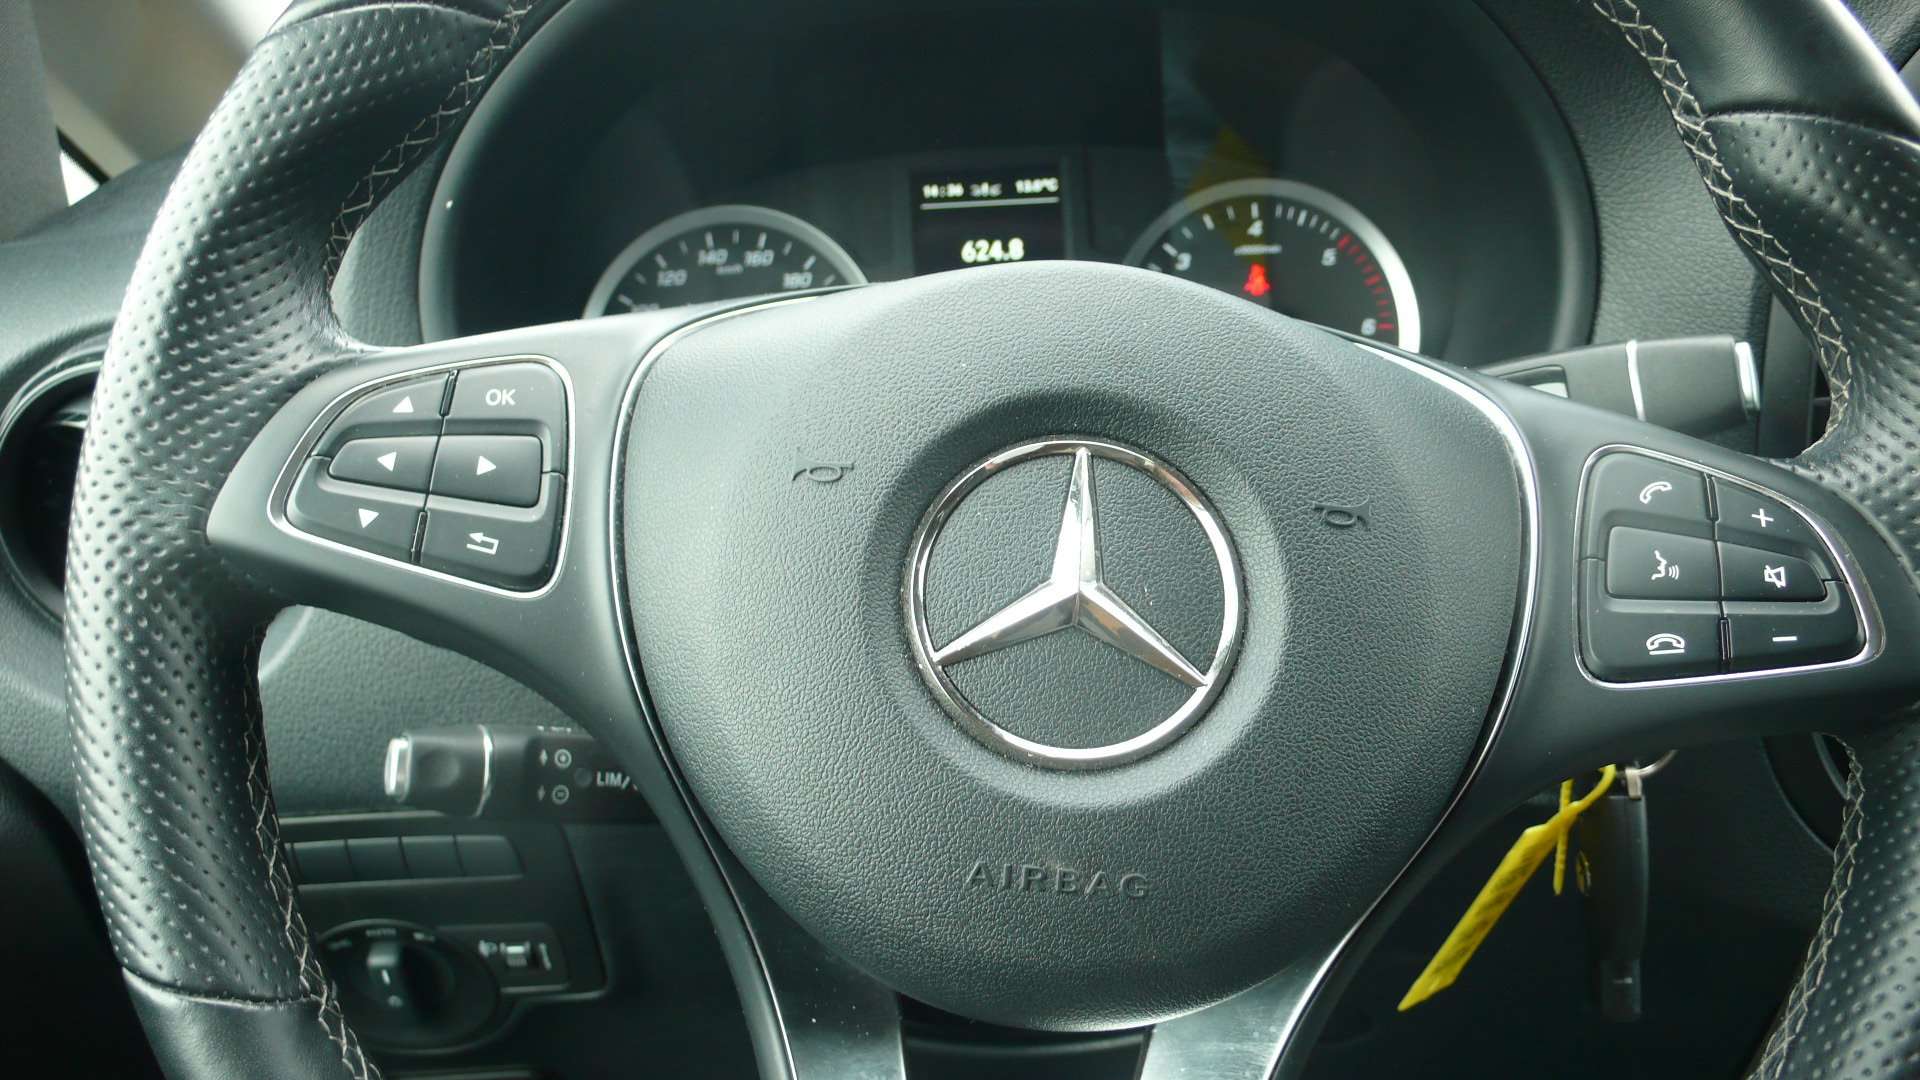 Mercedes-Benz Vito 116 CDI Tourer XL - 9 zitpl - auto - 65 000km Garage Frank Mesure